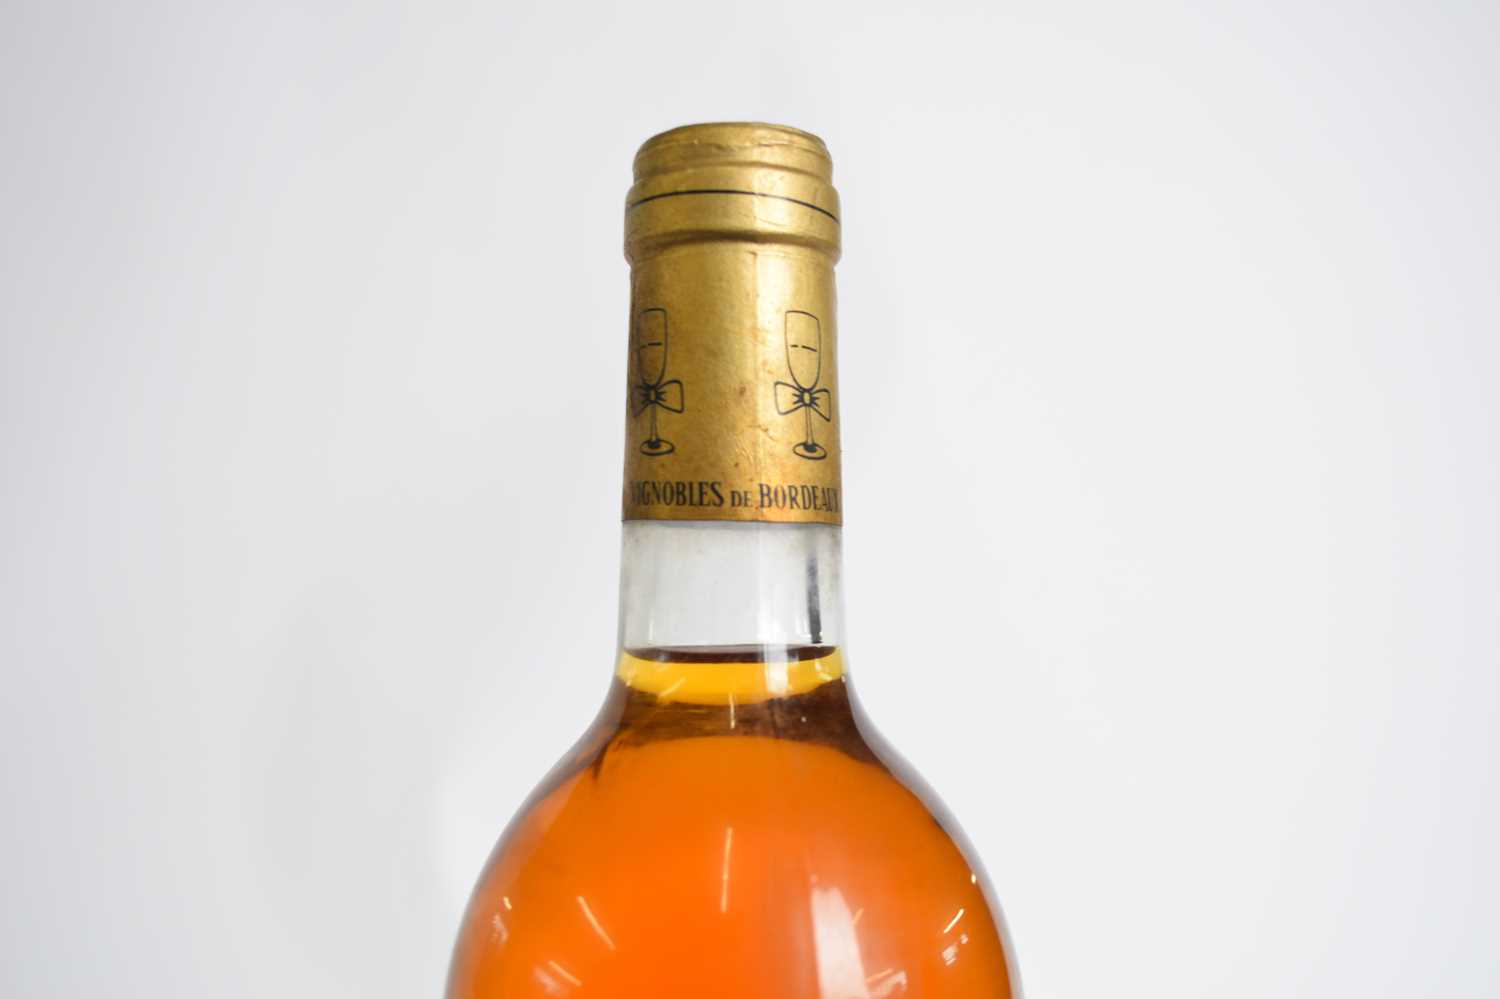 One bottle White Bordeaux, label missing - Image 2 of 2